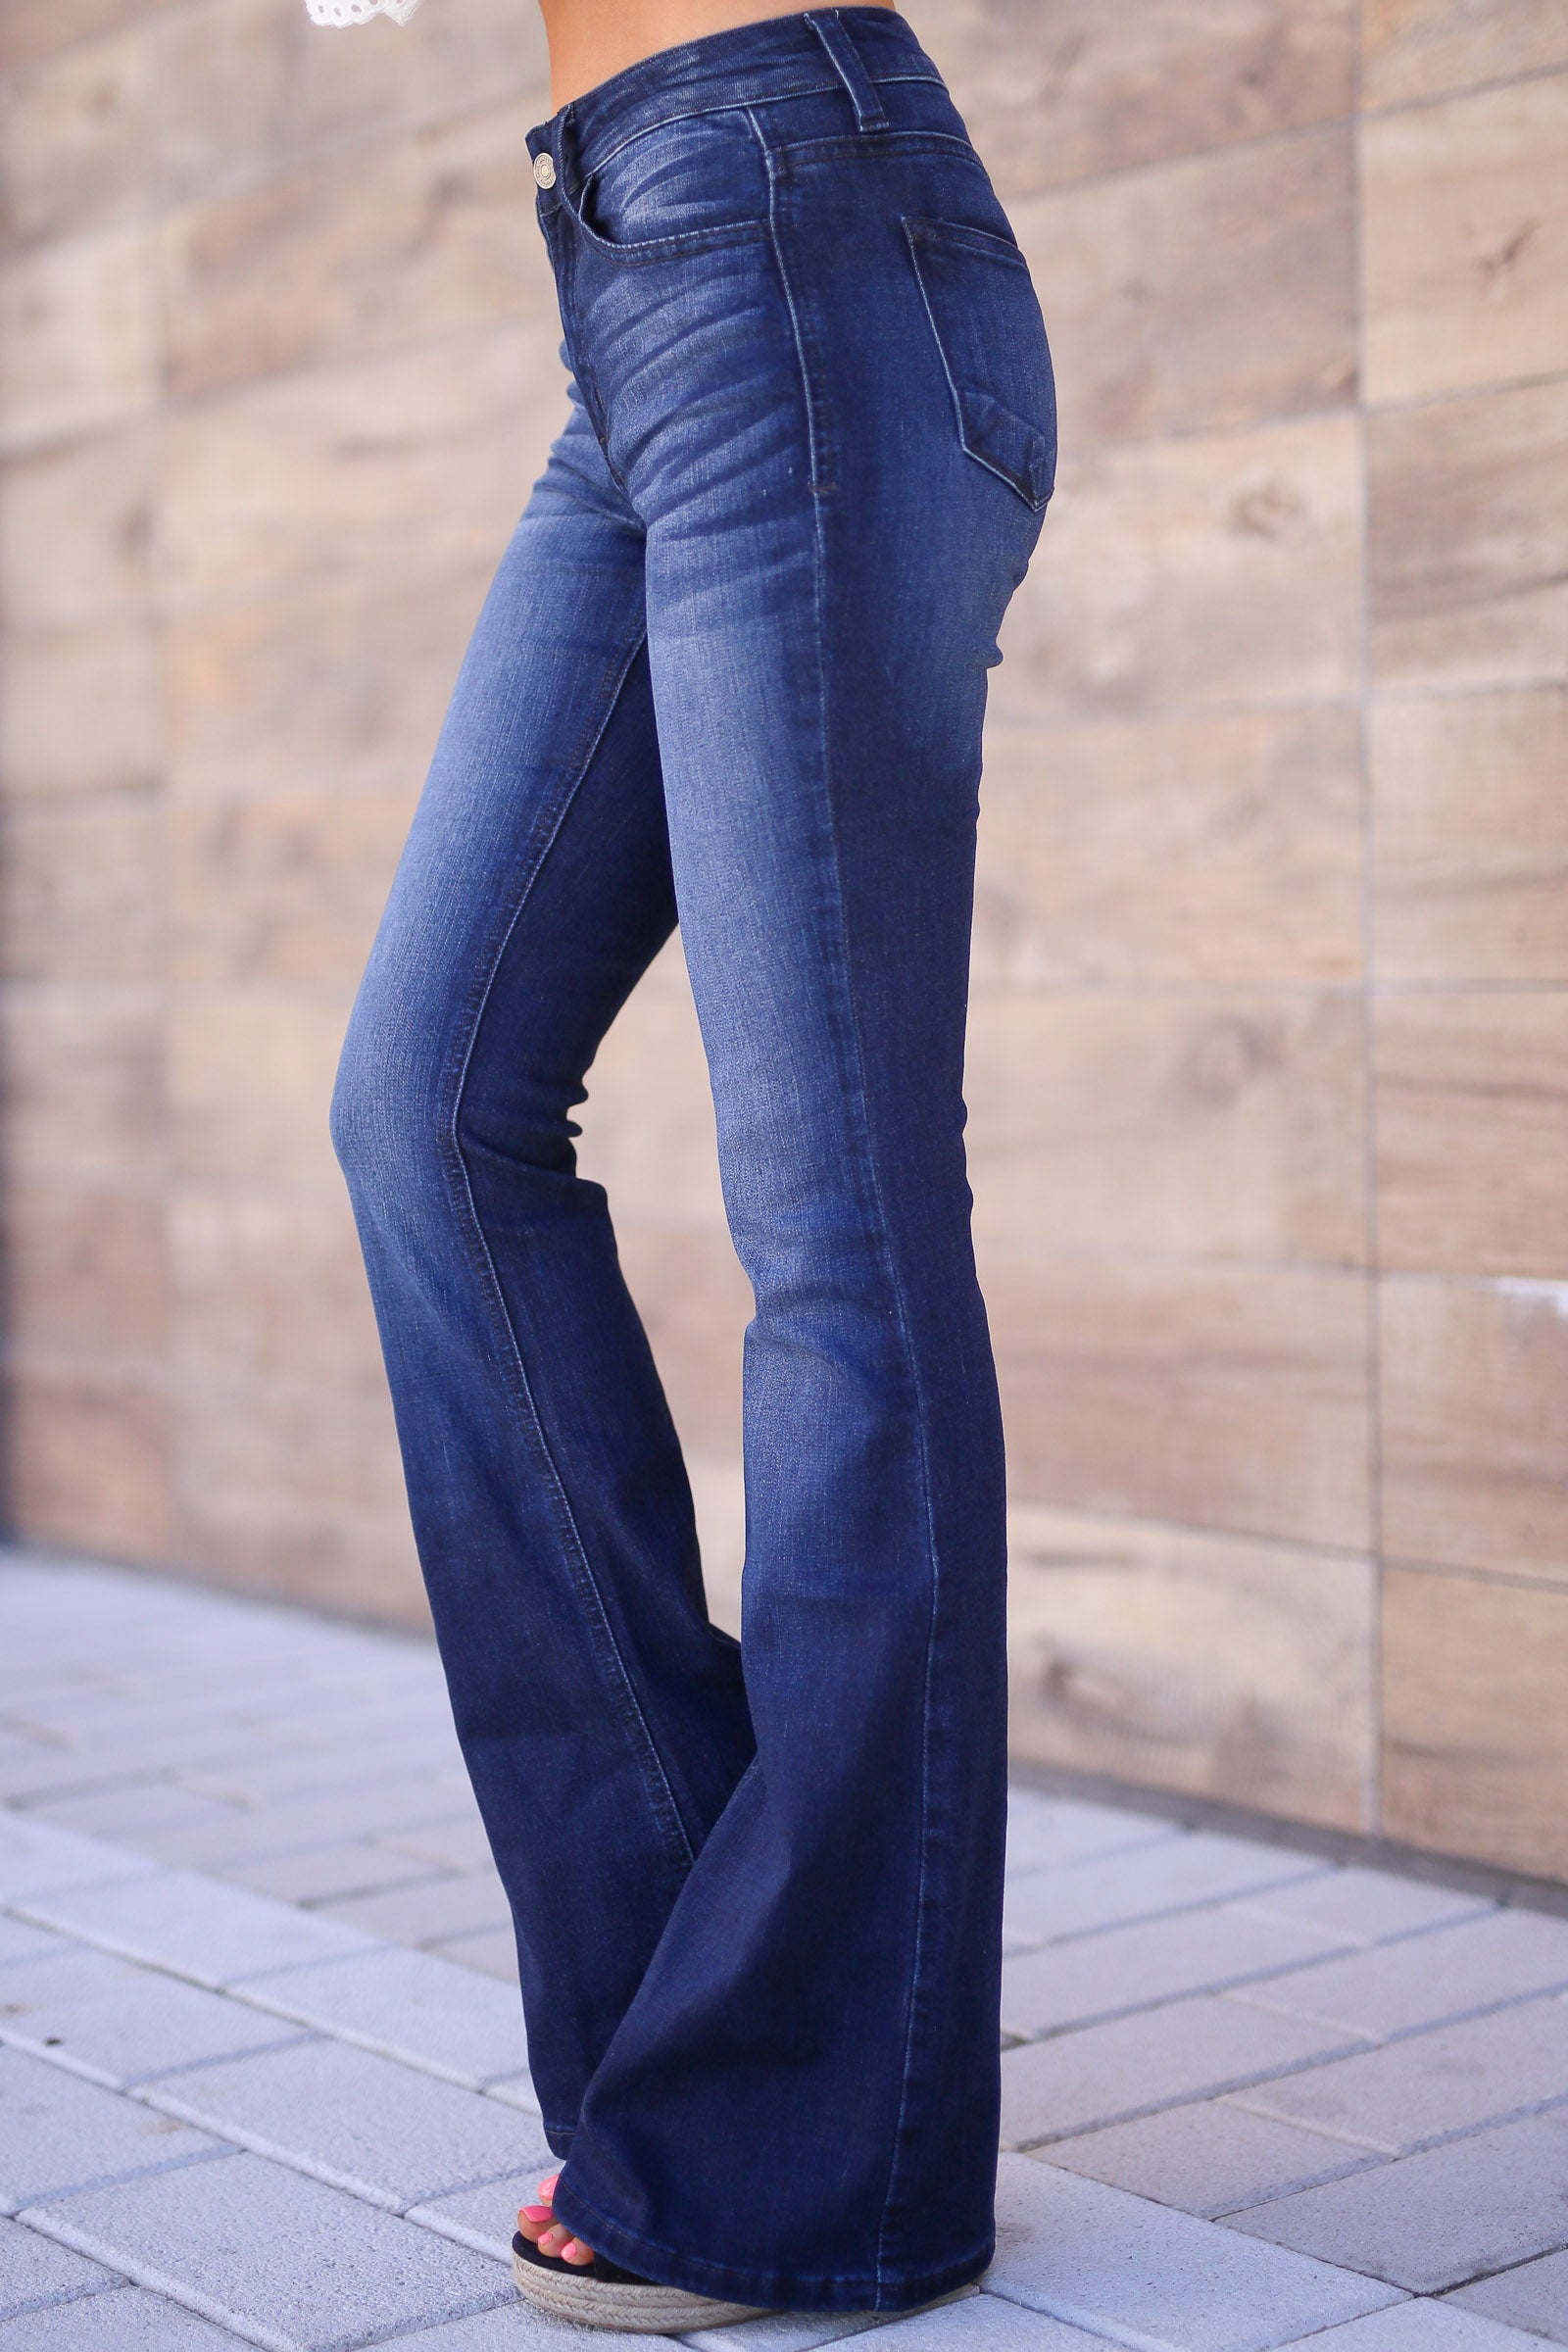 paige ultra skinny jeans